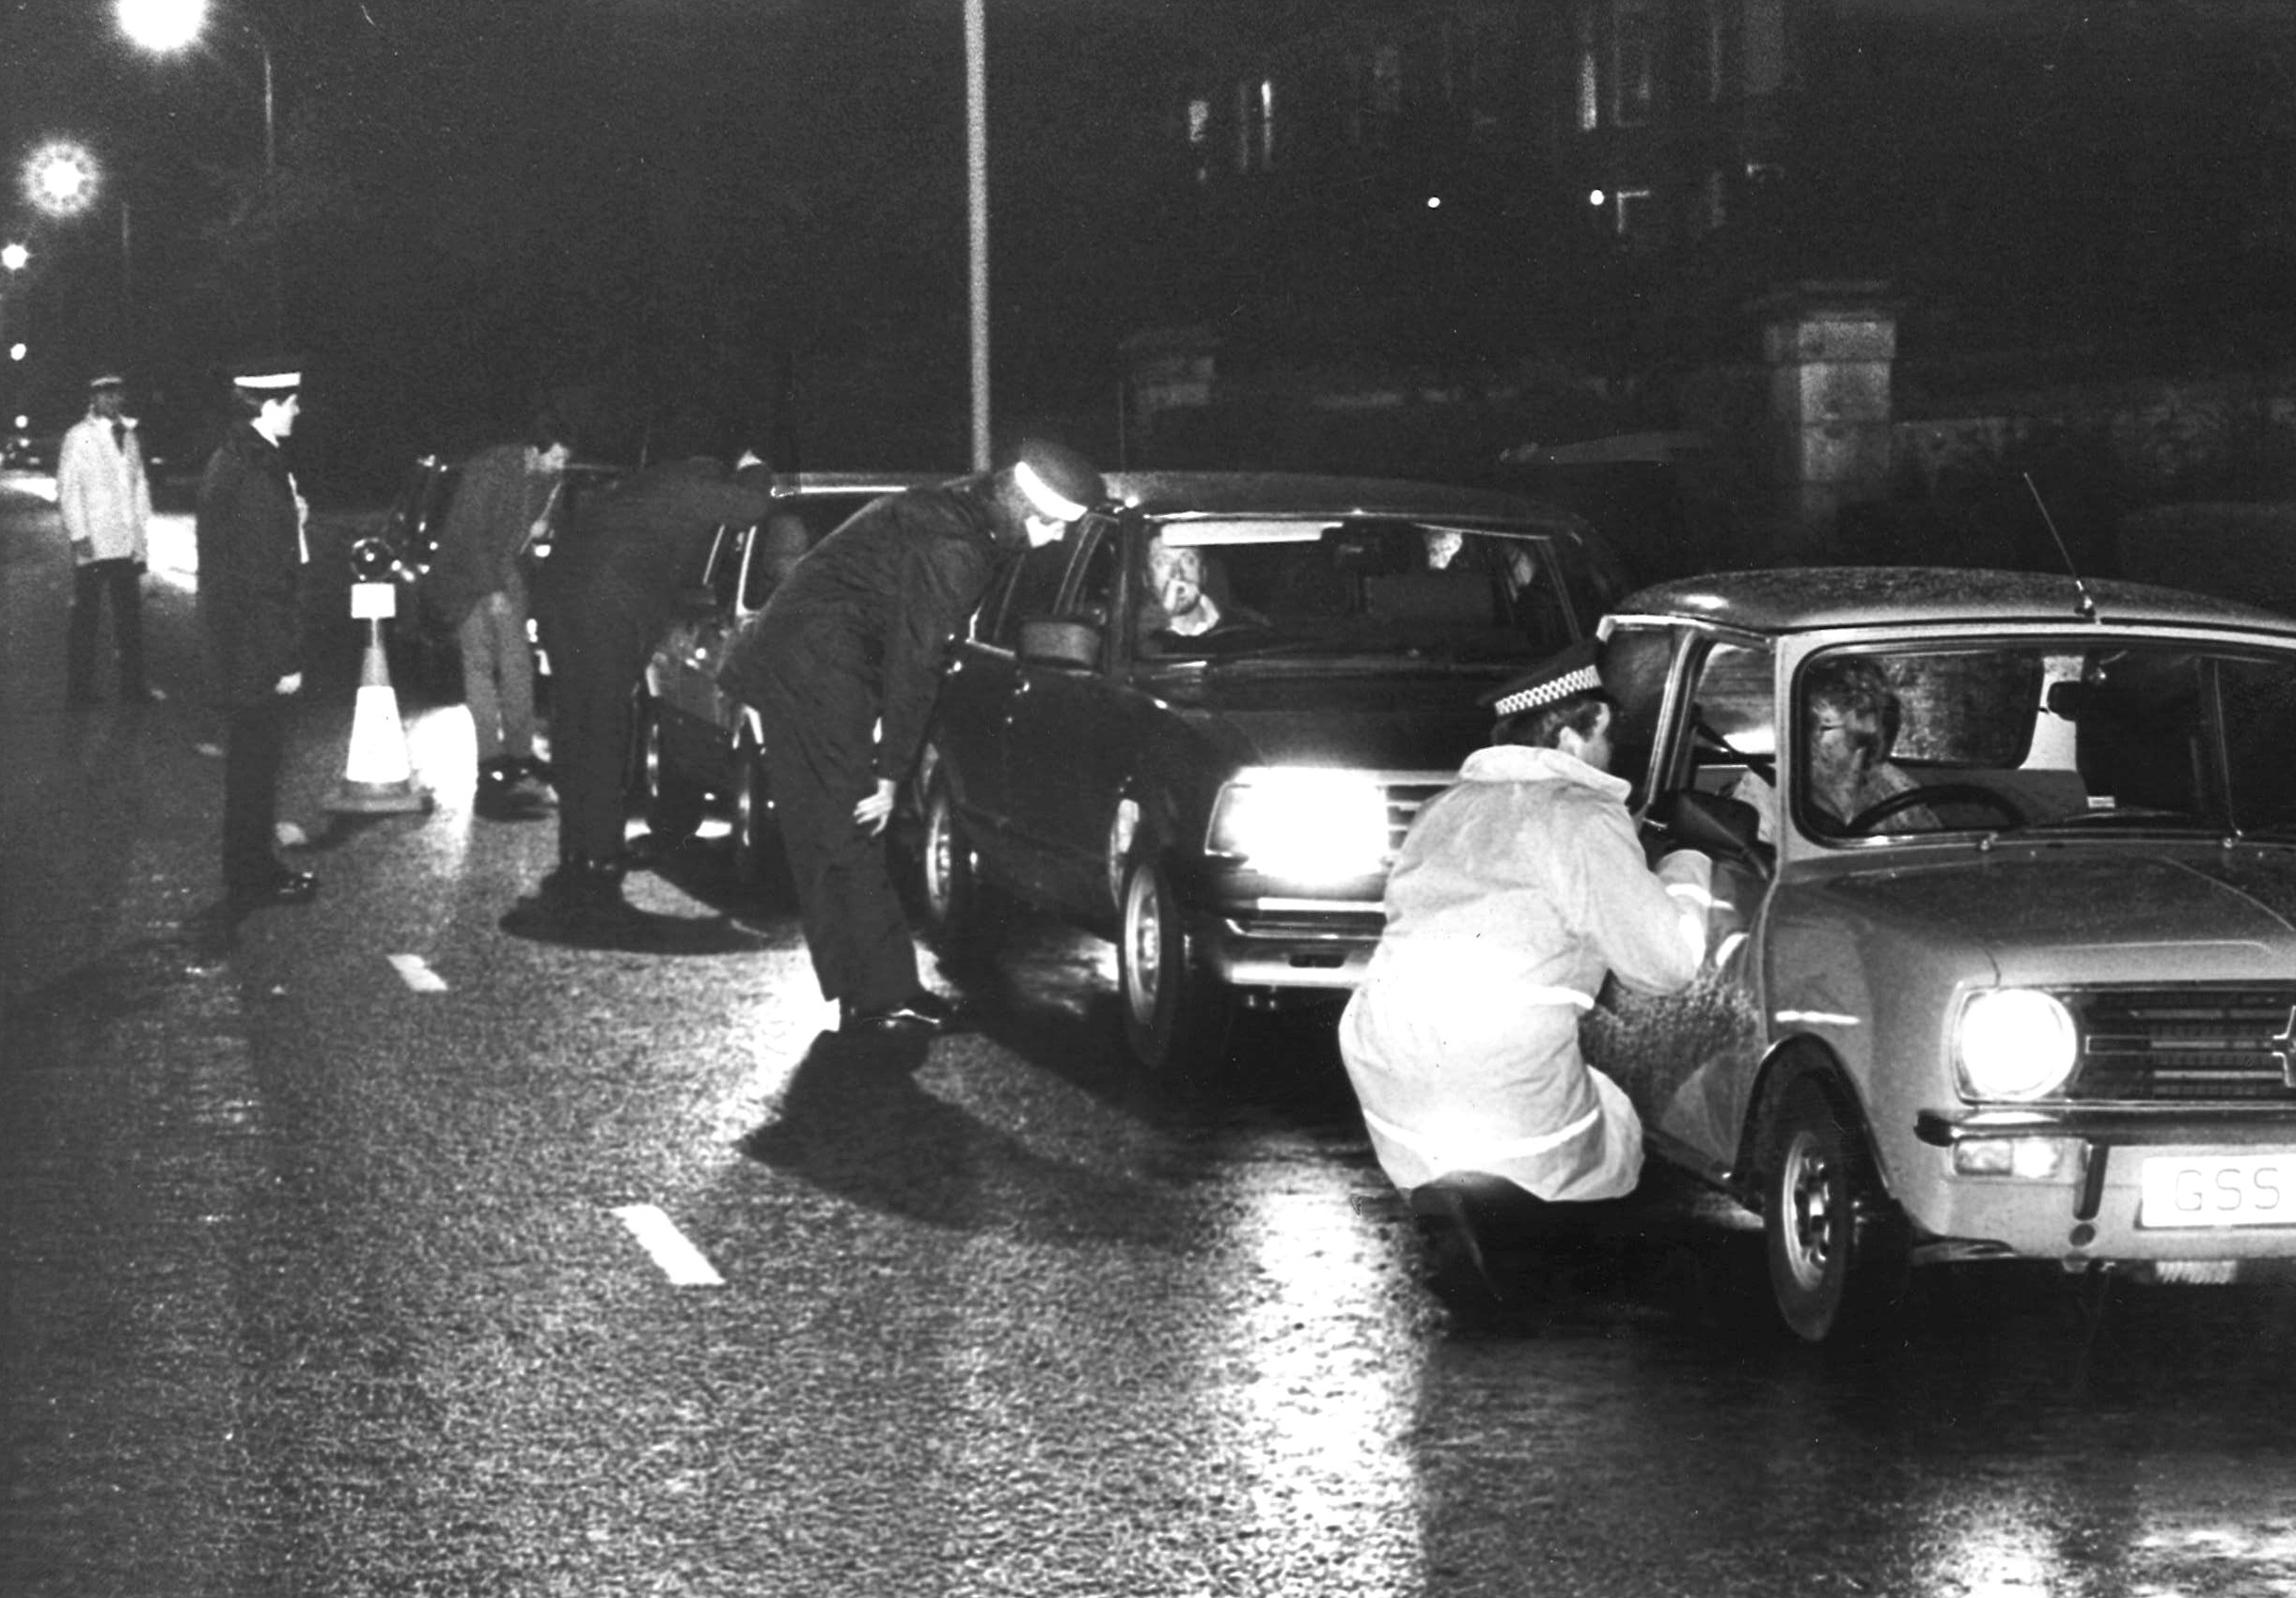 Police question motoroists on Queens road George Murdoch 06/10/83